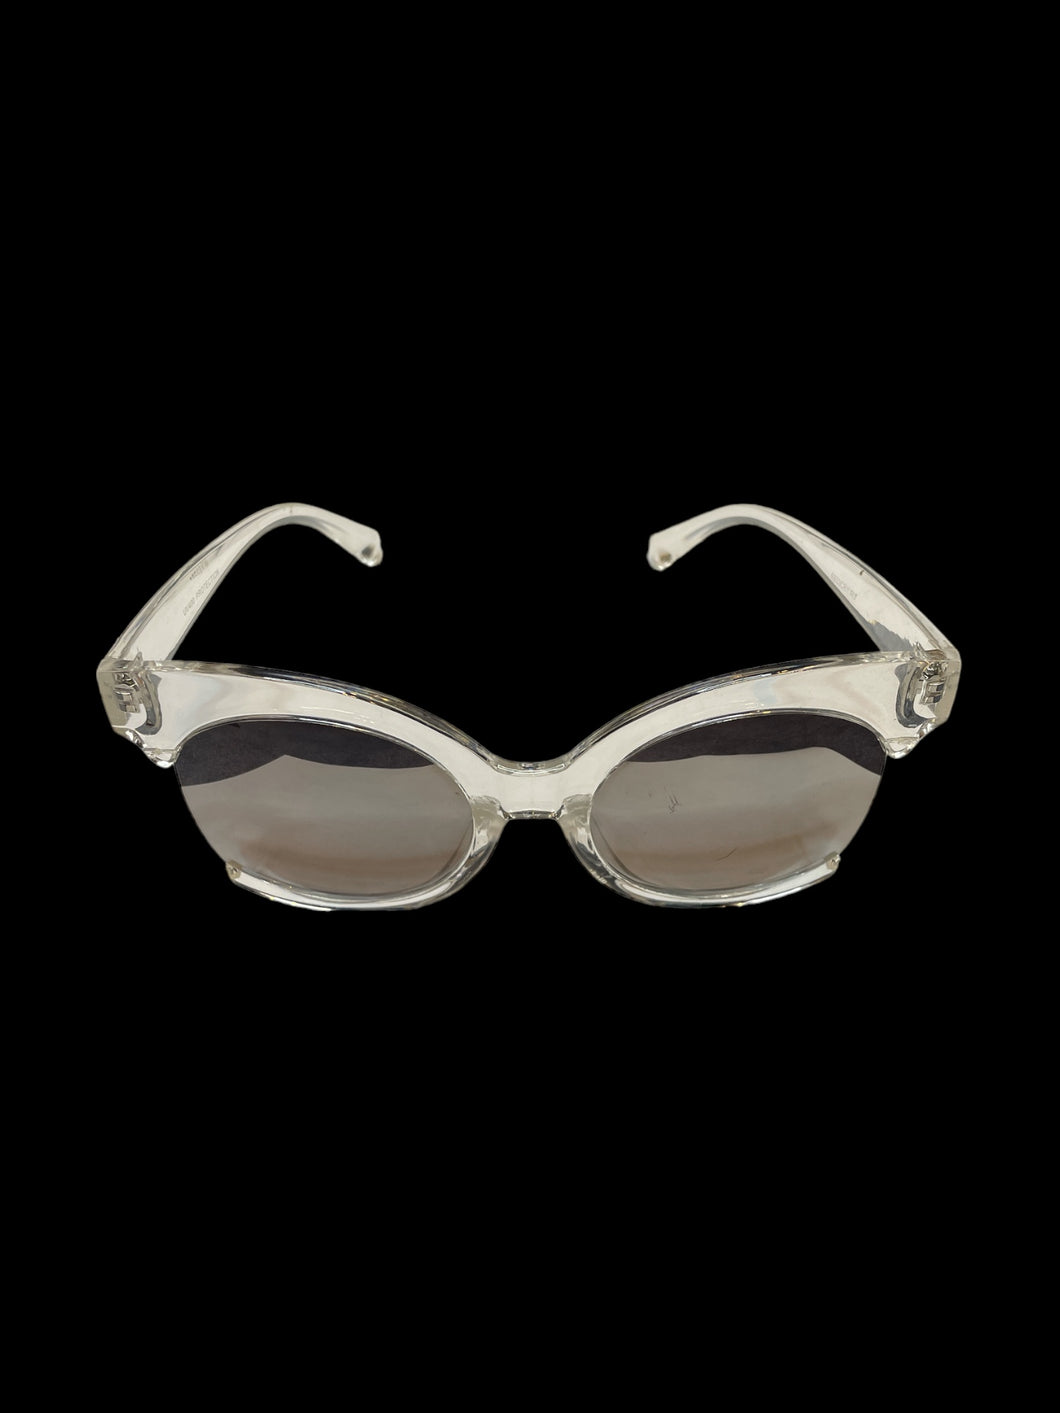 Clear c-frame sunglasses